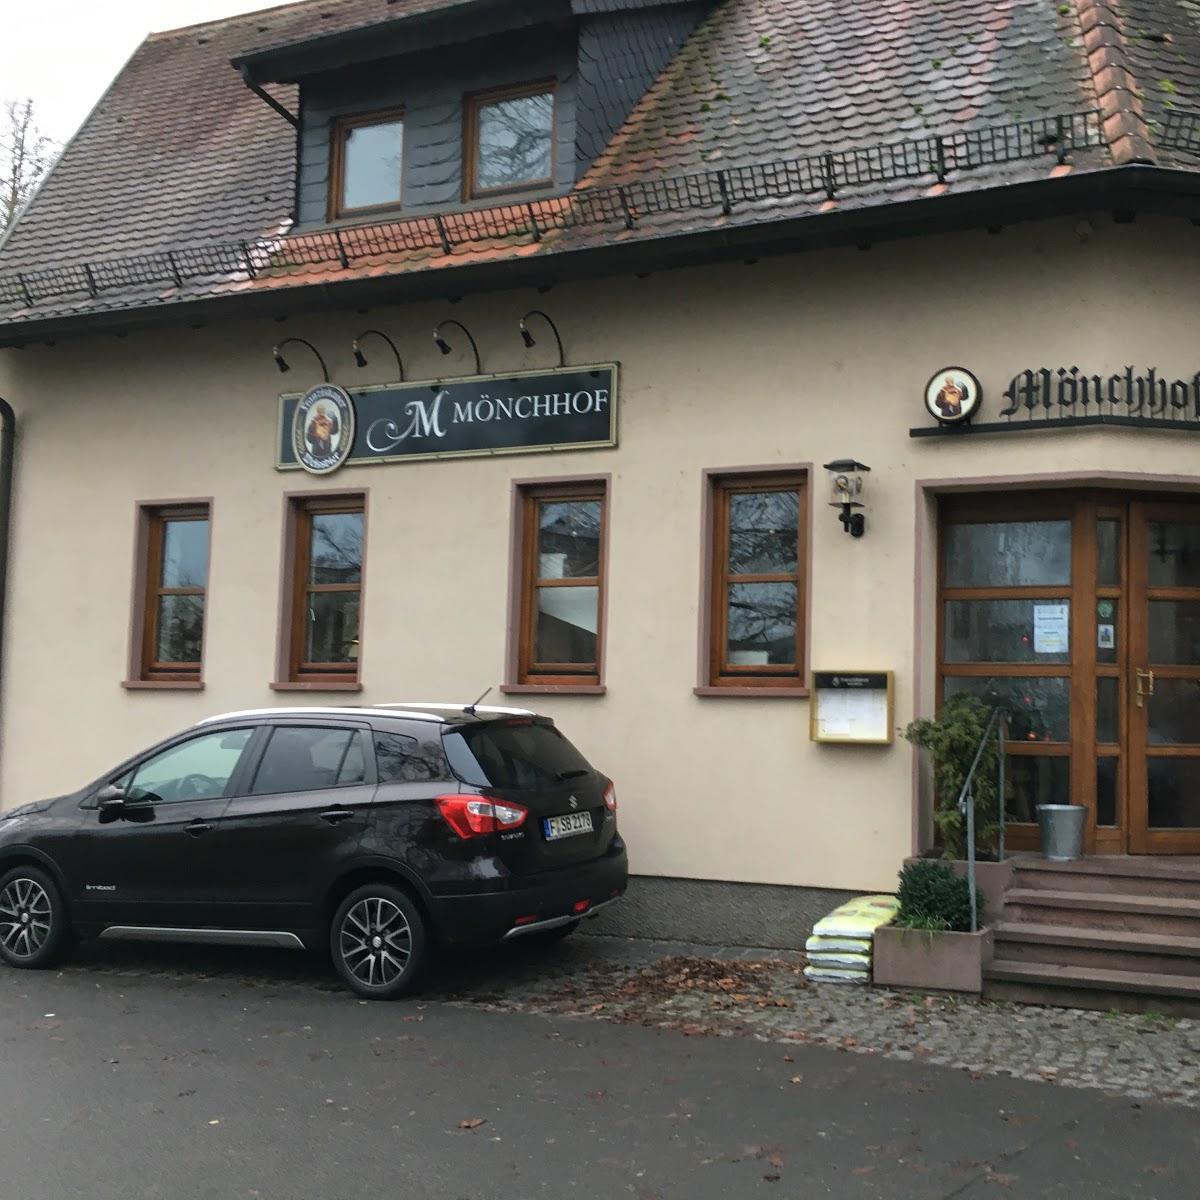 Restaurant "Mönchhof" in Frankfurt am Main